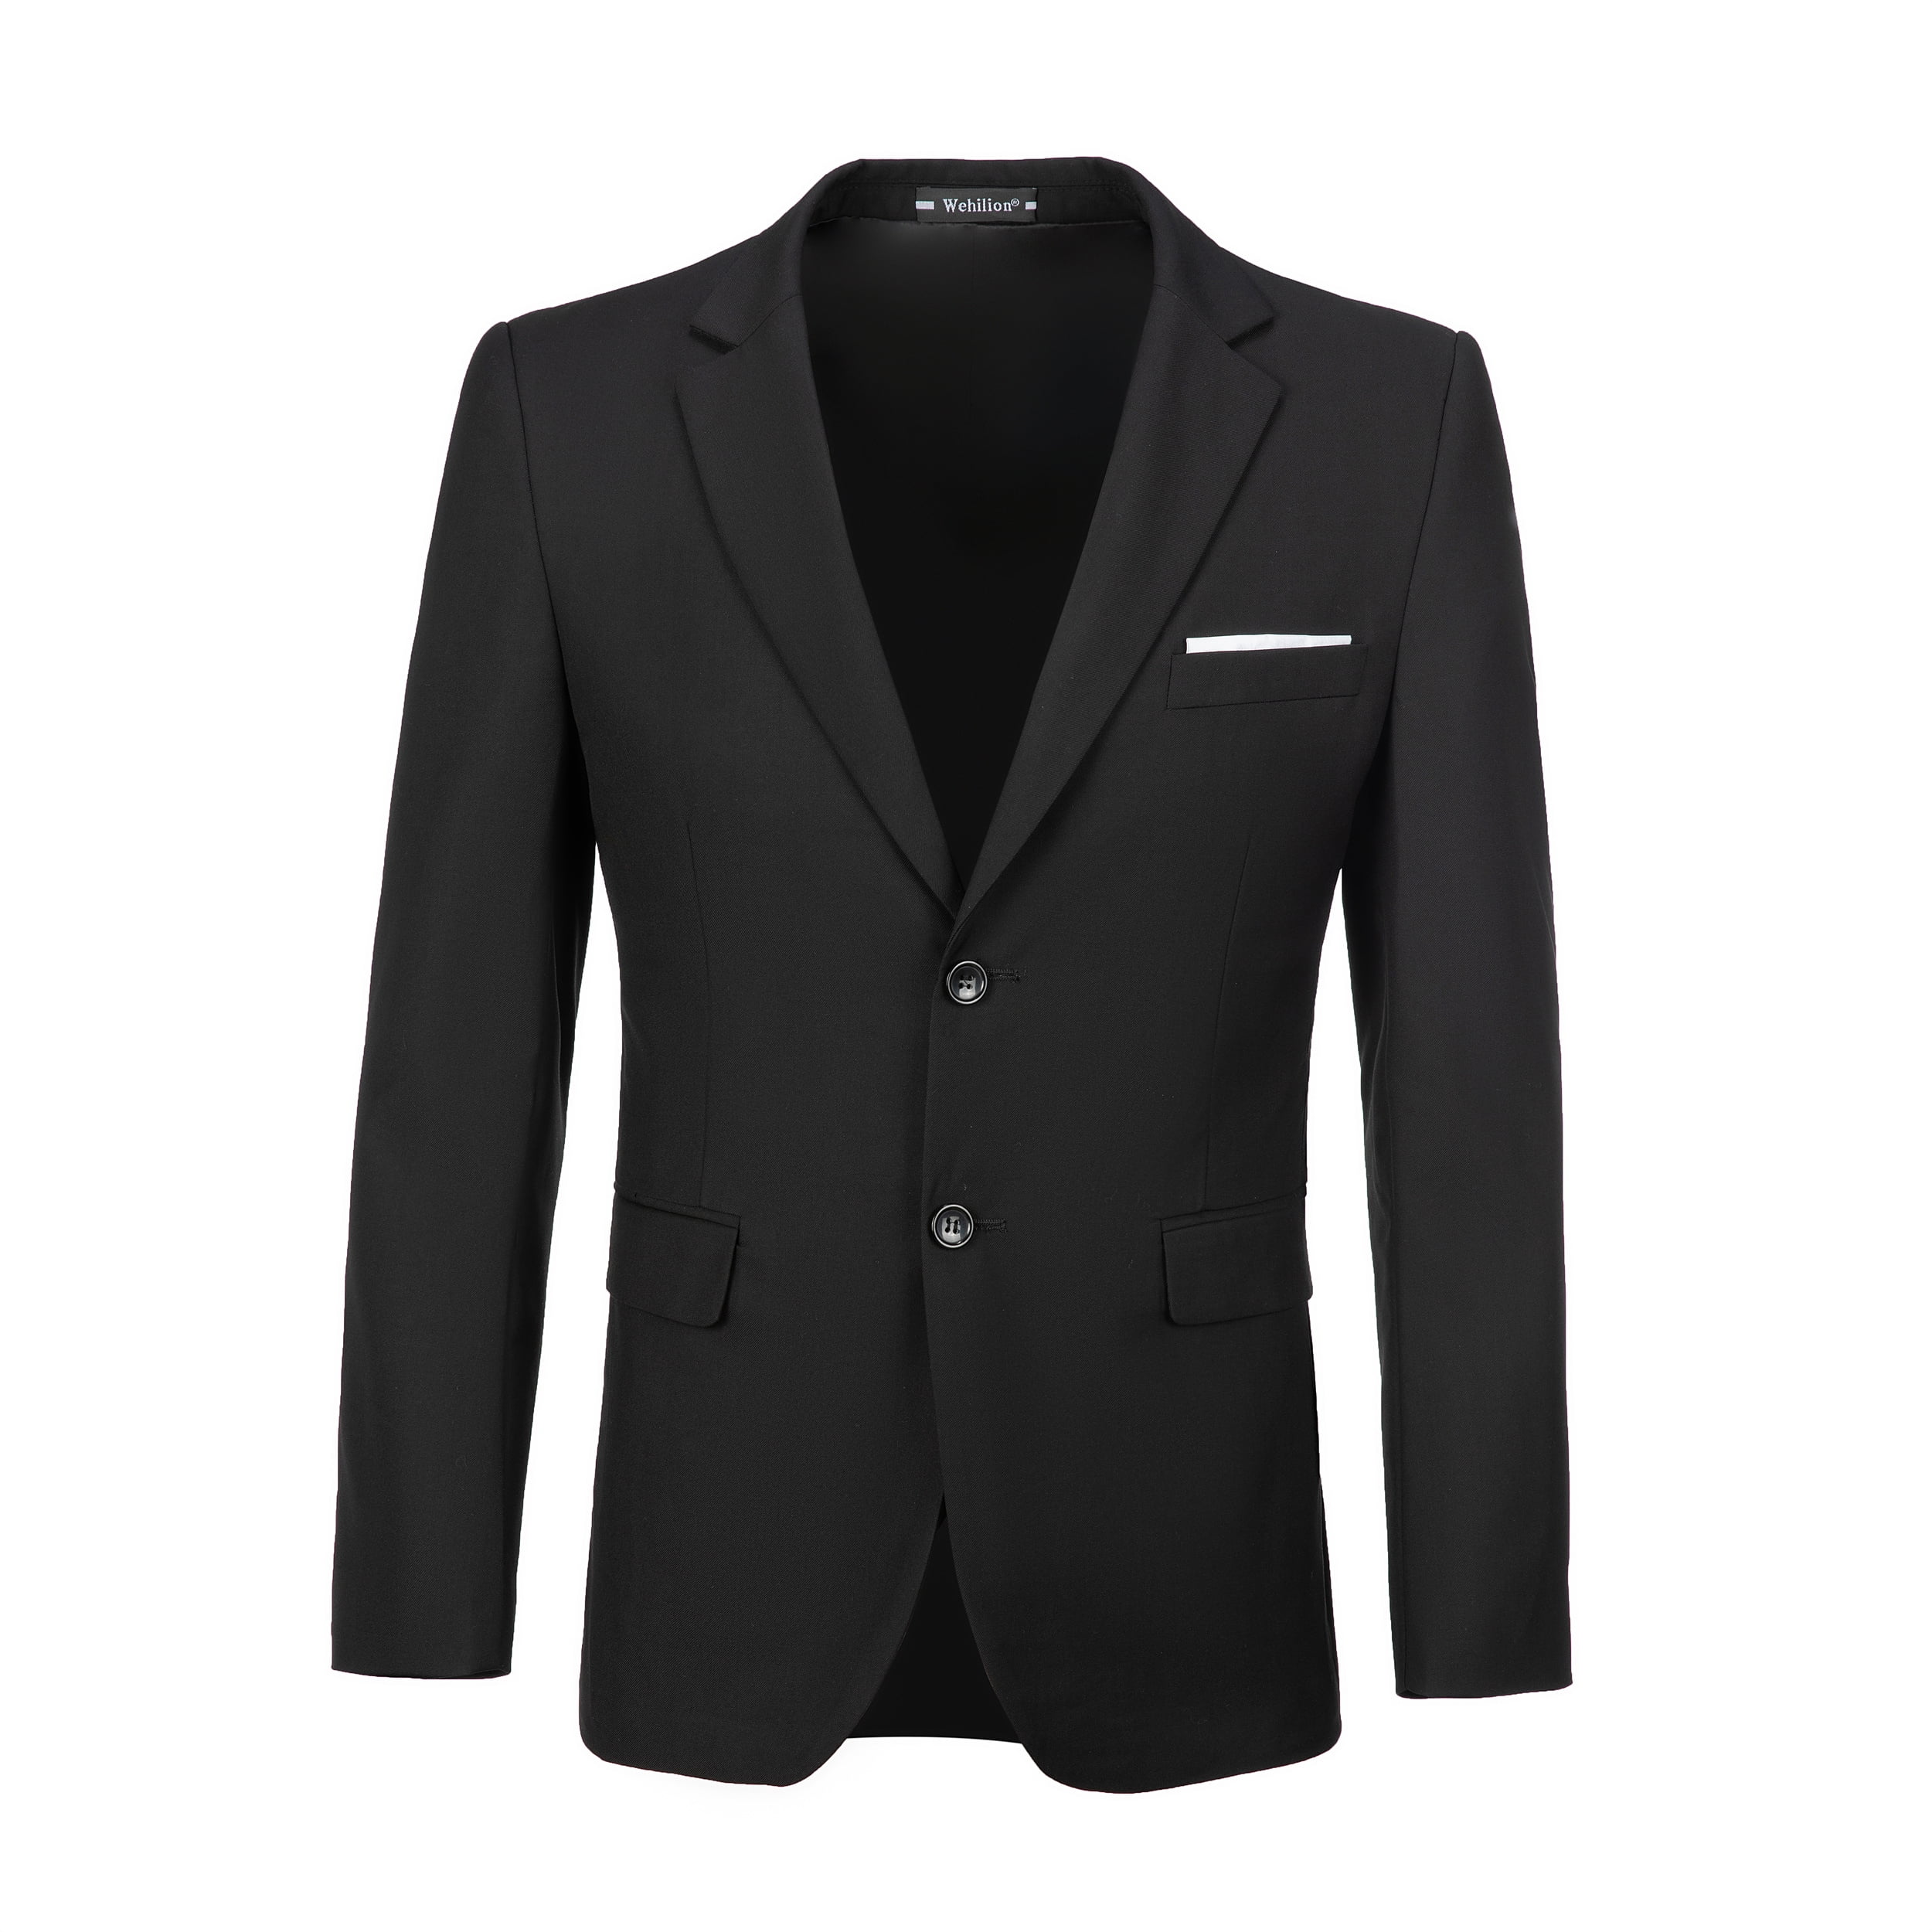 Wehilion Men's Premium Stretch Classic Fit Suit Jacket Separate Coat ...